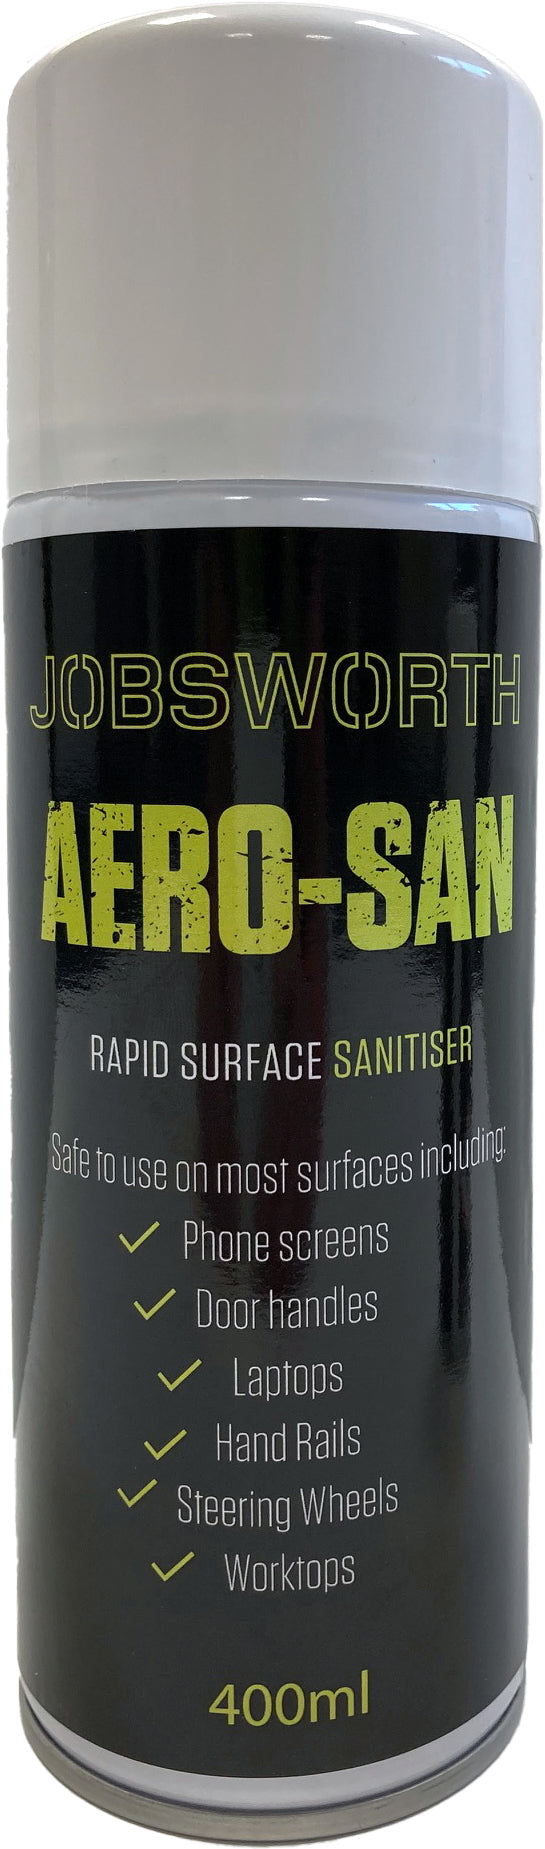 Jobsworth Aerosan Rapid Surface Sanitiser